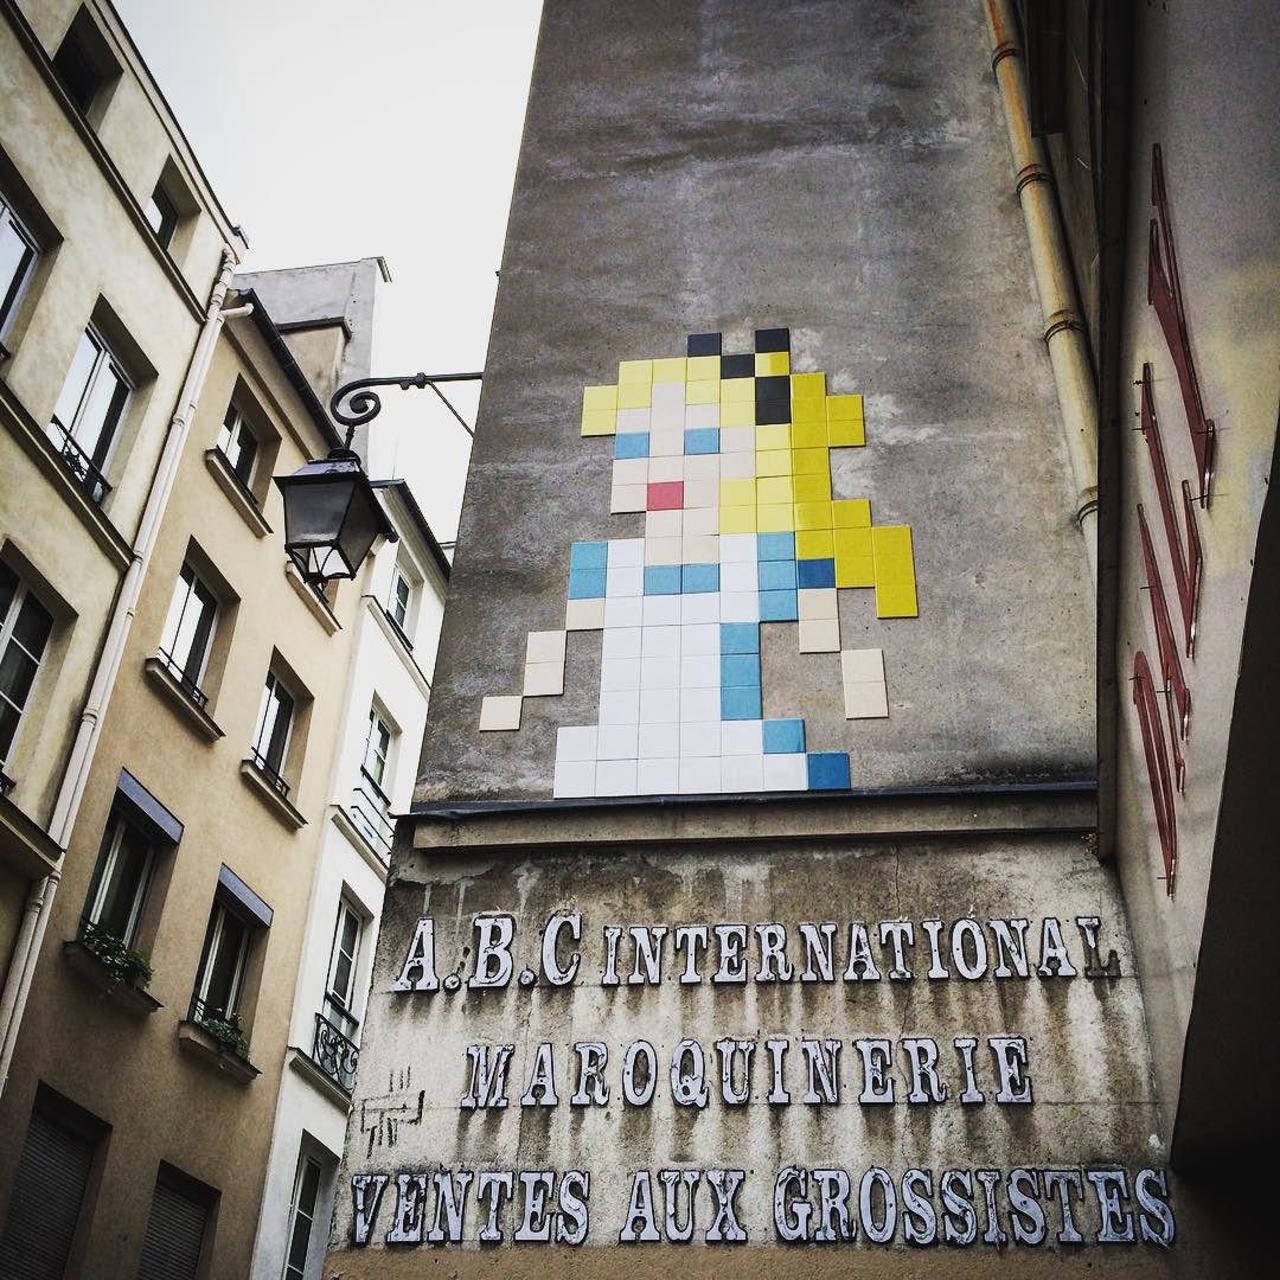 circumjacent_fr: #Paris #graffiti photo by vintage26 http://ift.tt/1RPVde1 #StreetArt http://t.co/XmIebadZOi